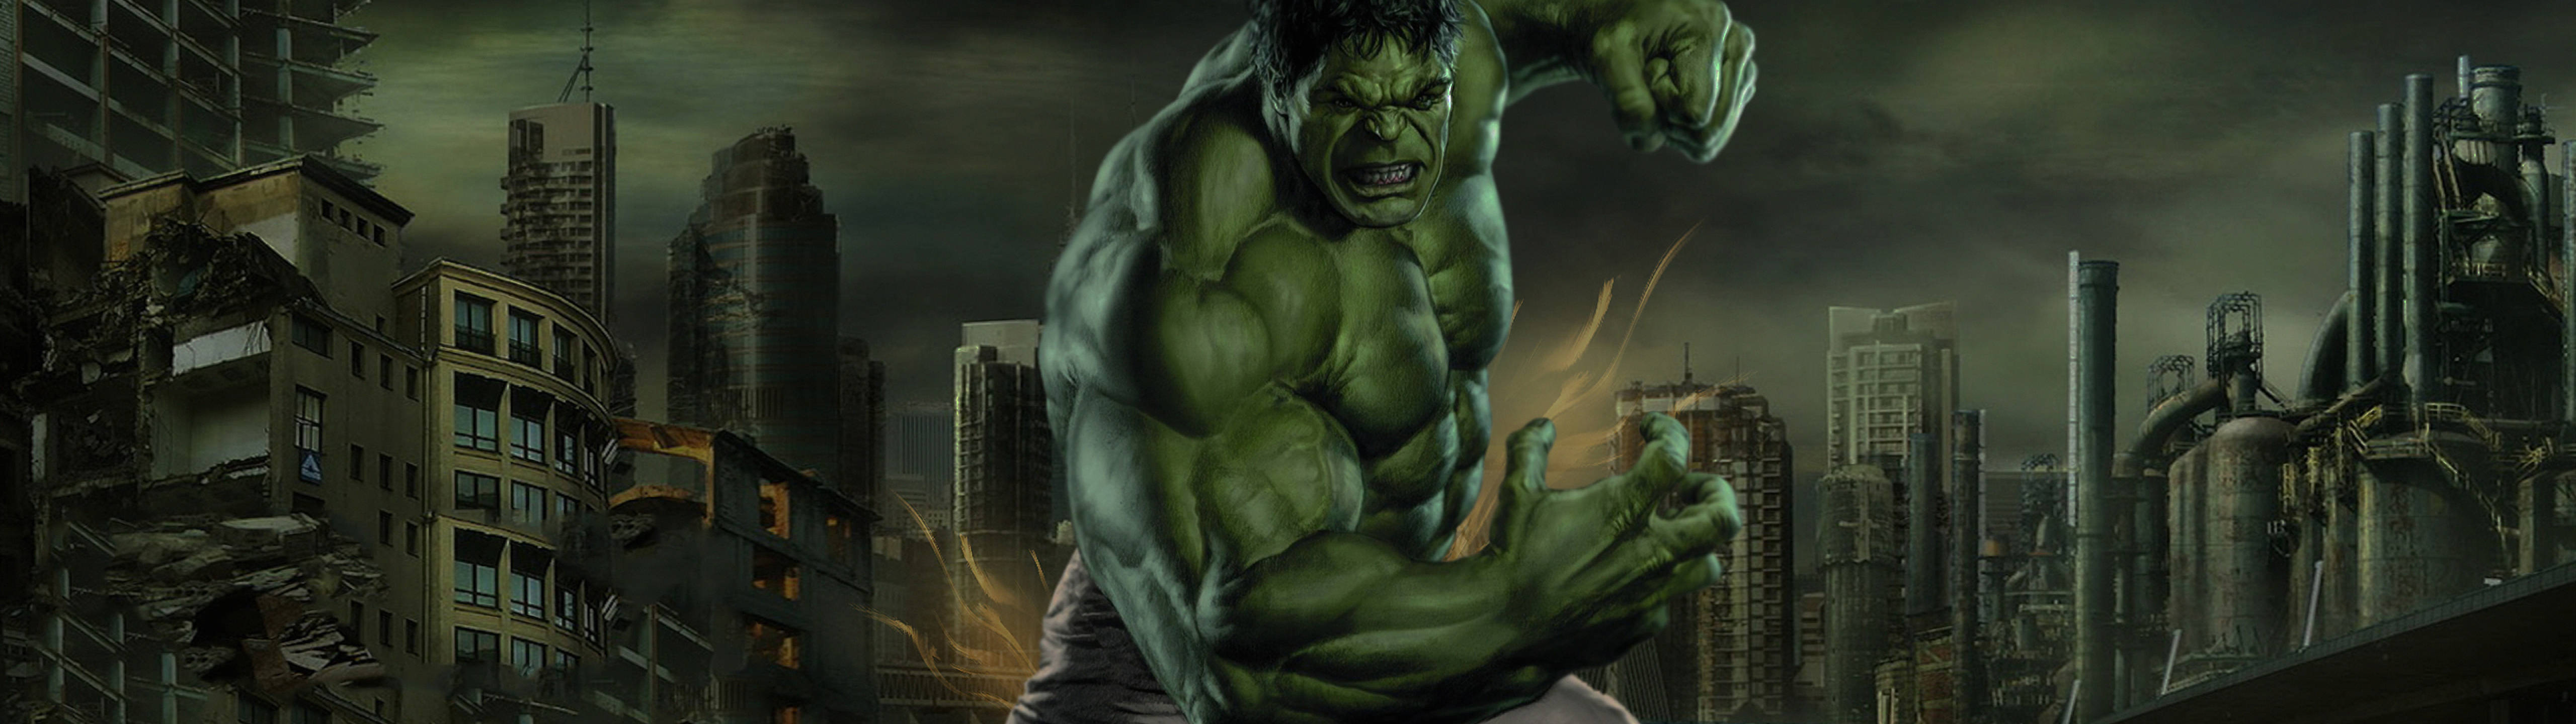 Marvel's Hulk 5120 X 1440